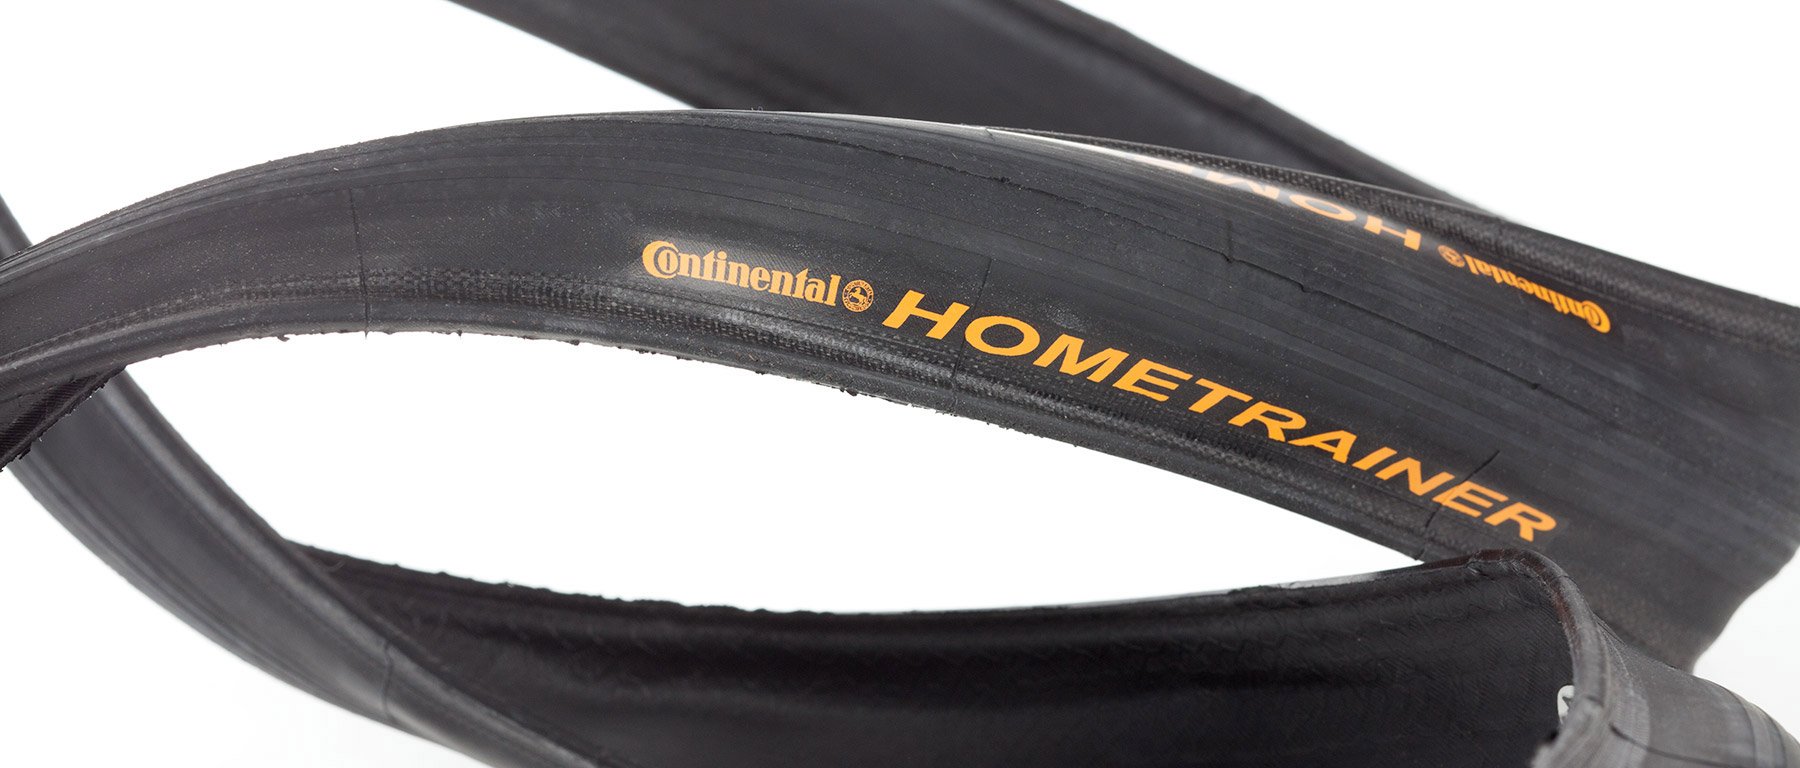 Continental Hometrainer Tire